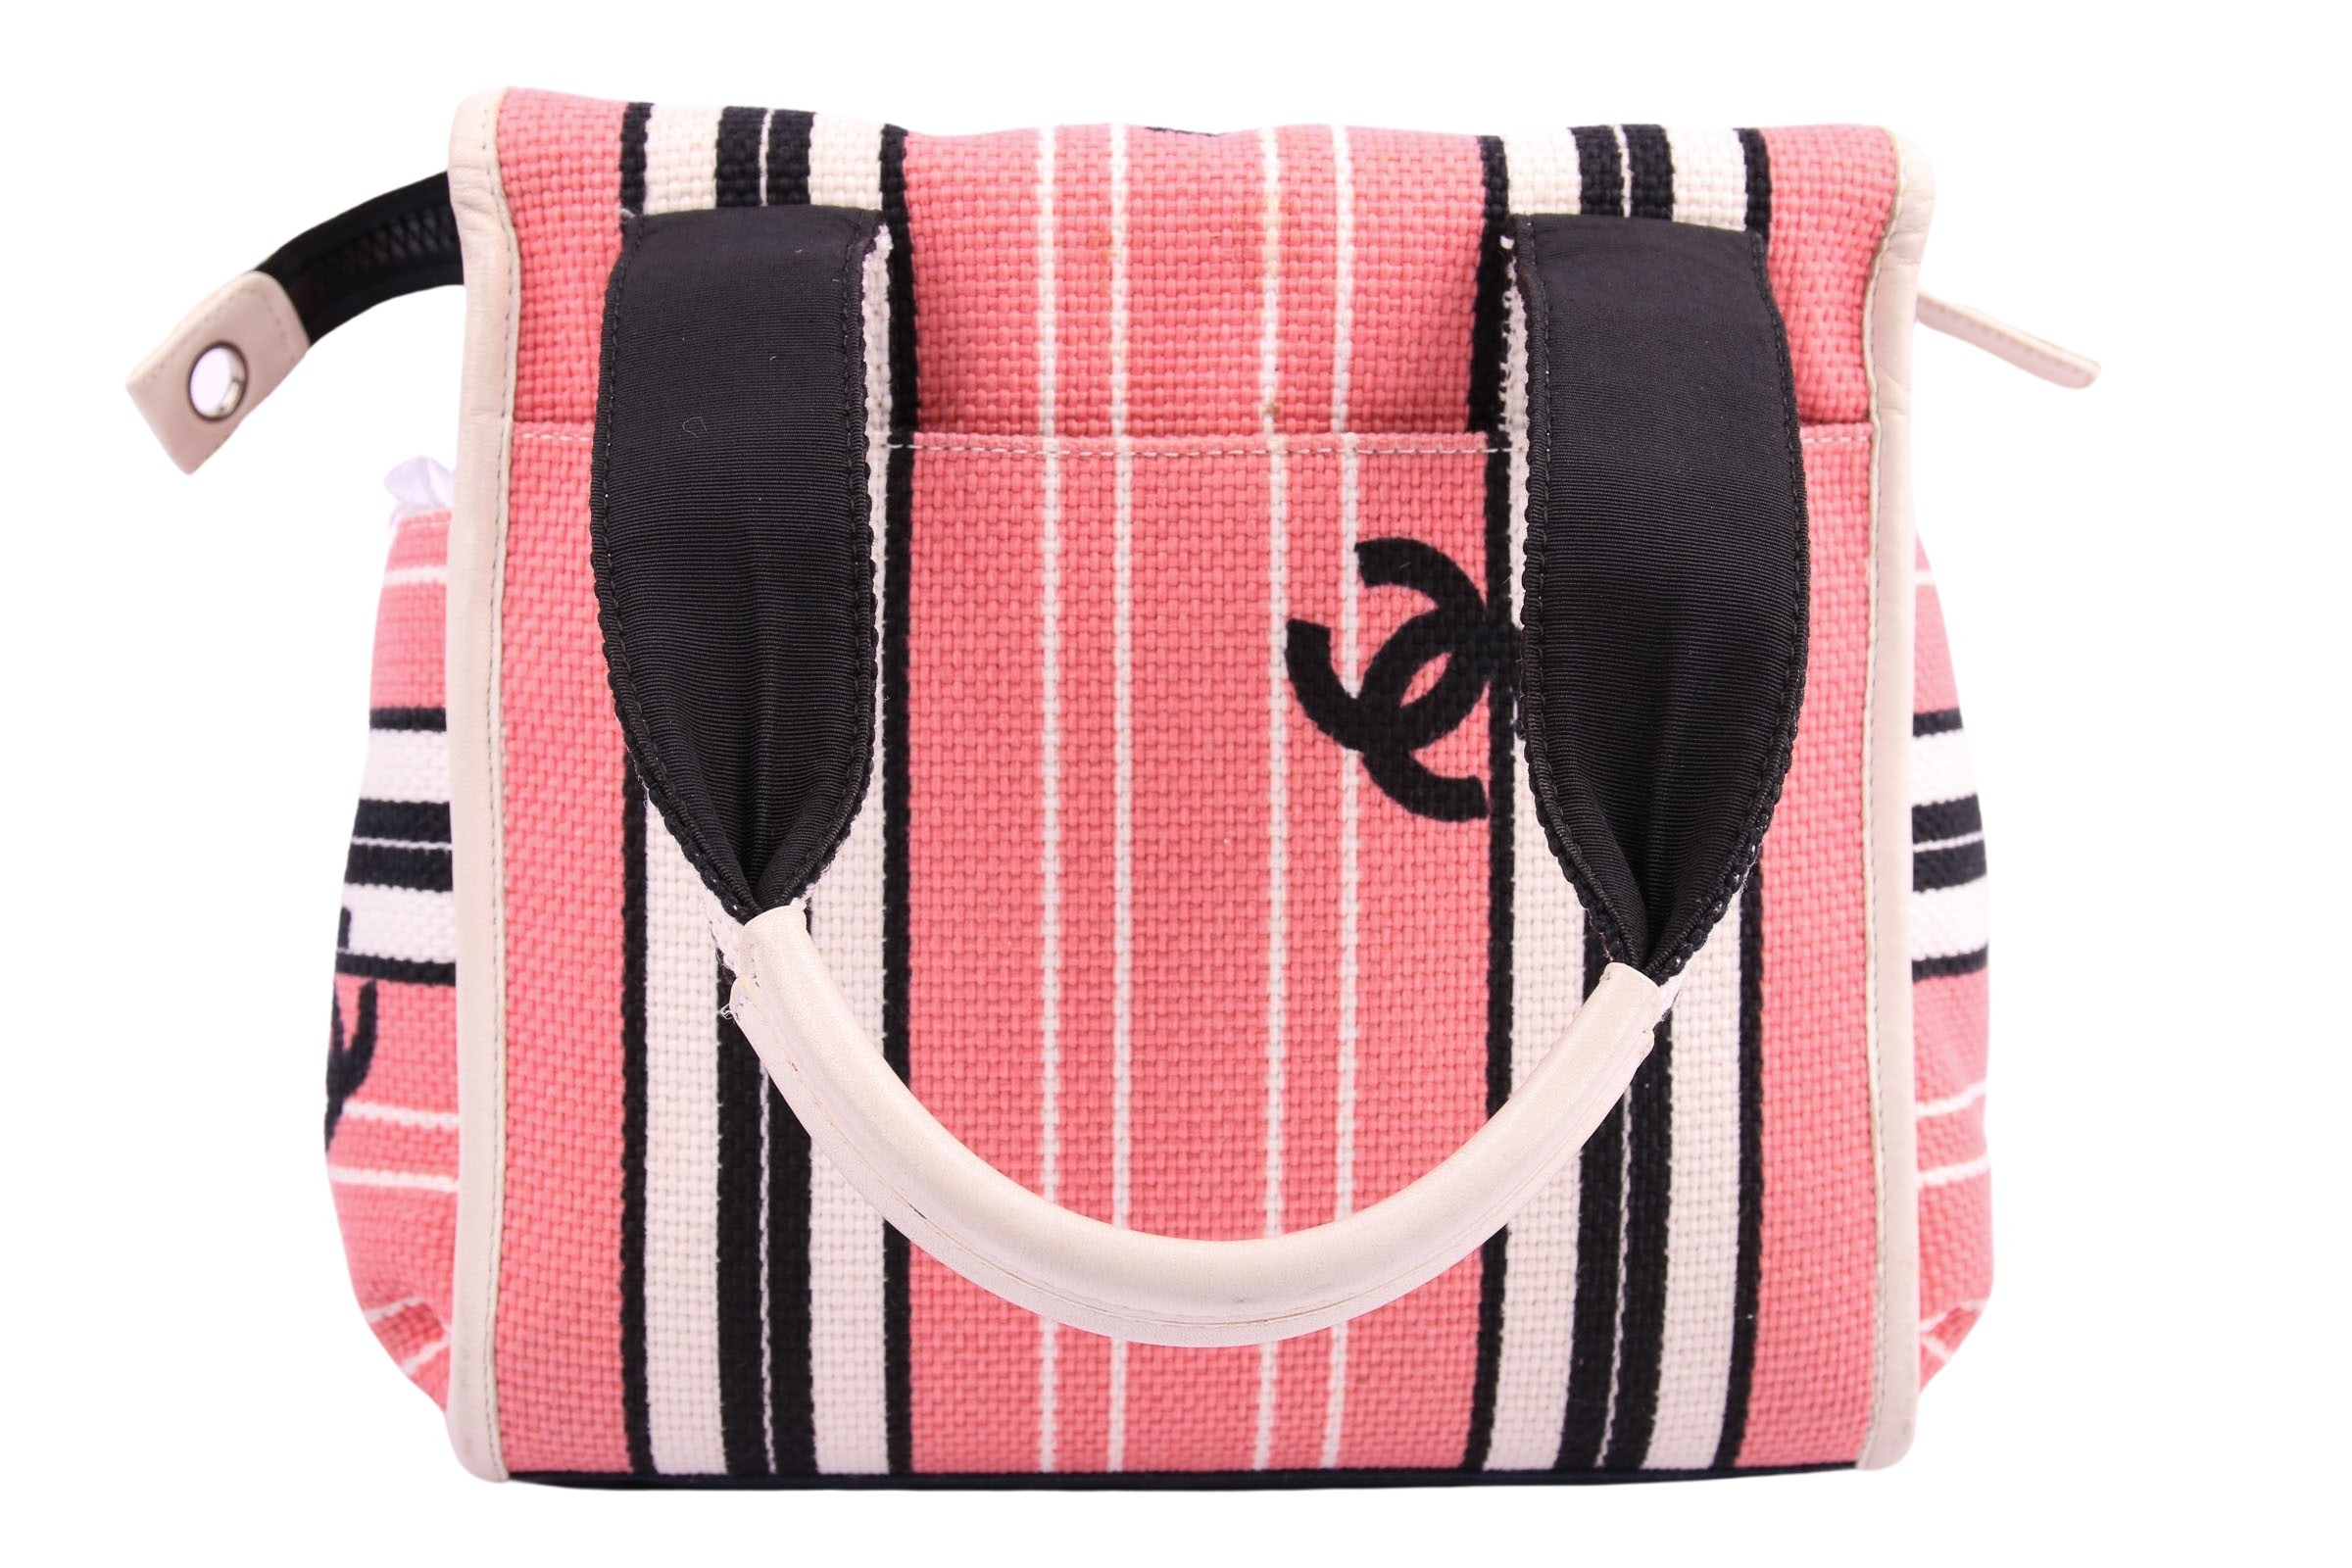 Chanel handbag fabric pink / white